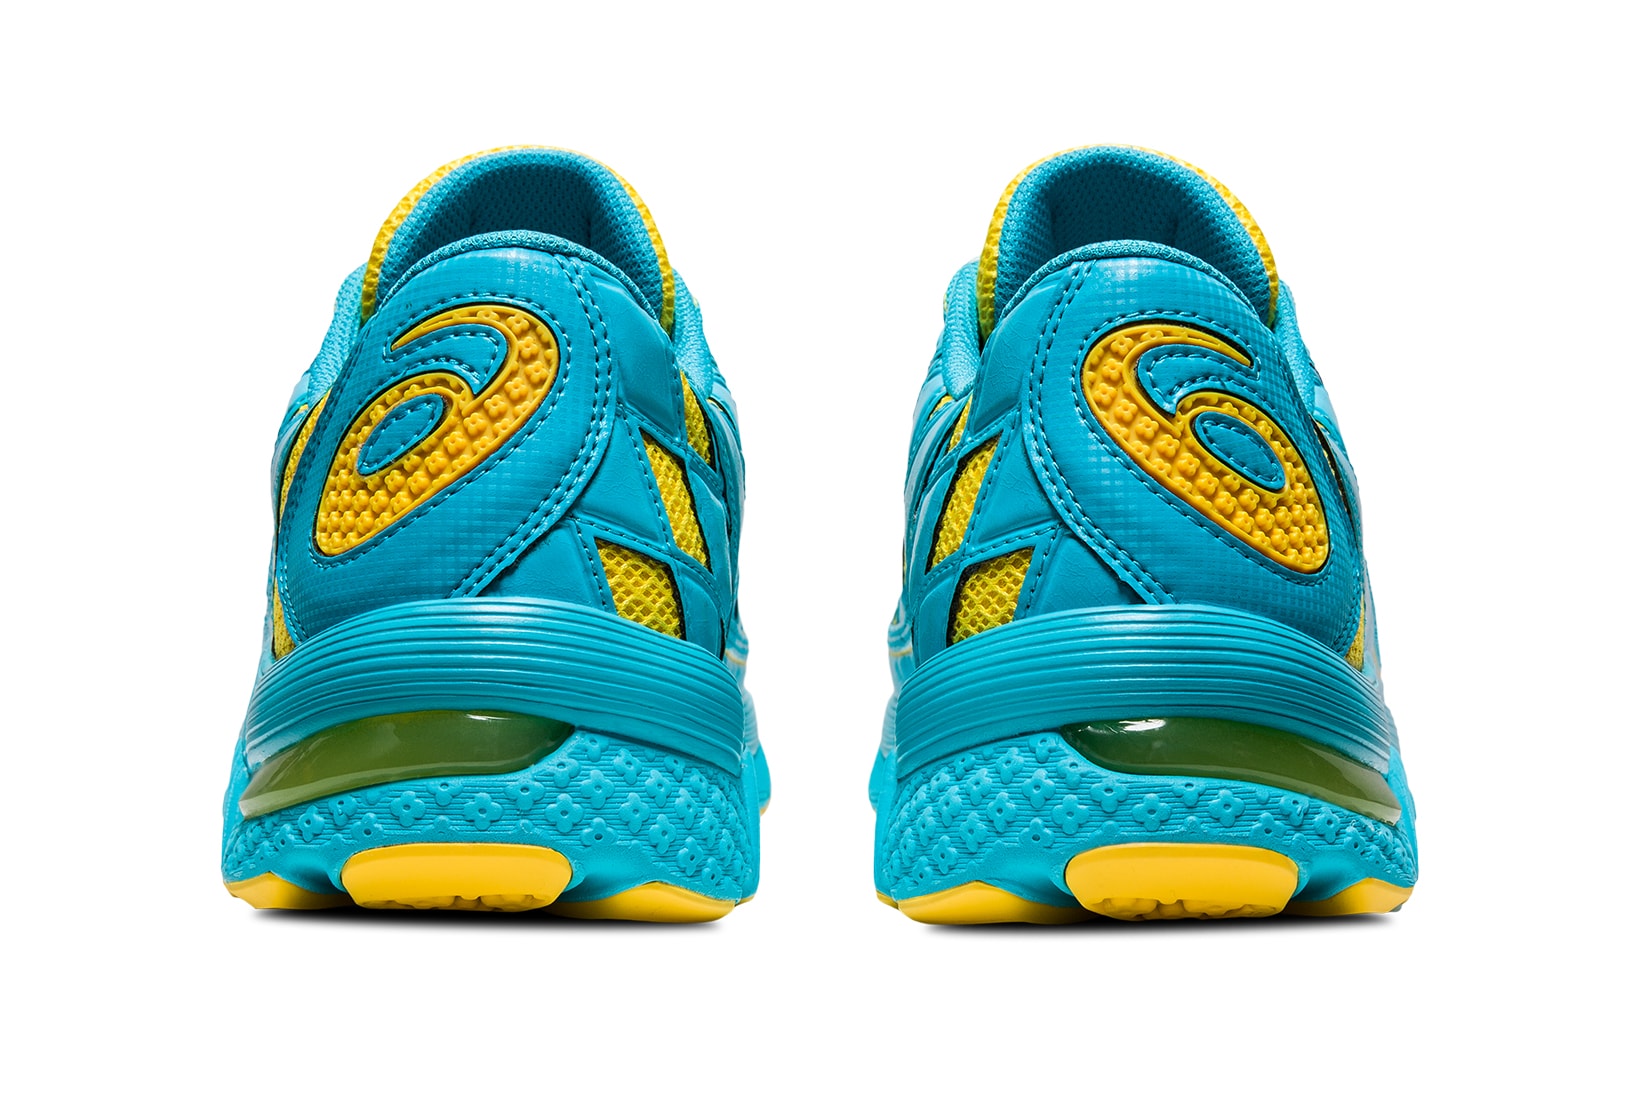 asics kiko kostadinov collaboration gel kiril blue yellow sneakers shoes footwear sneakerhead